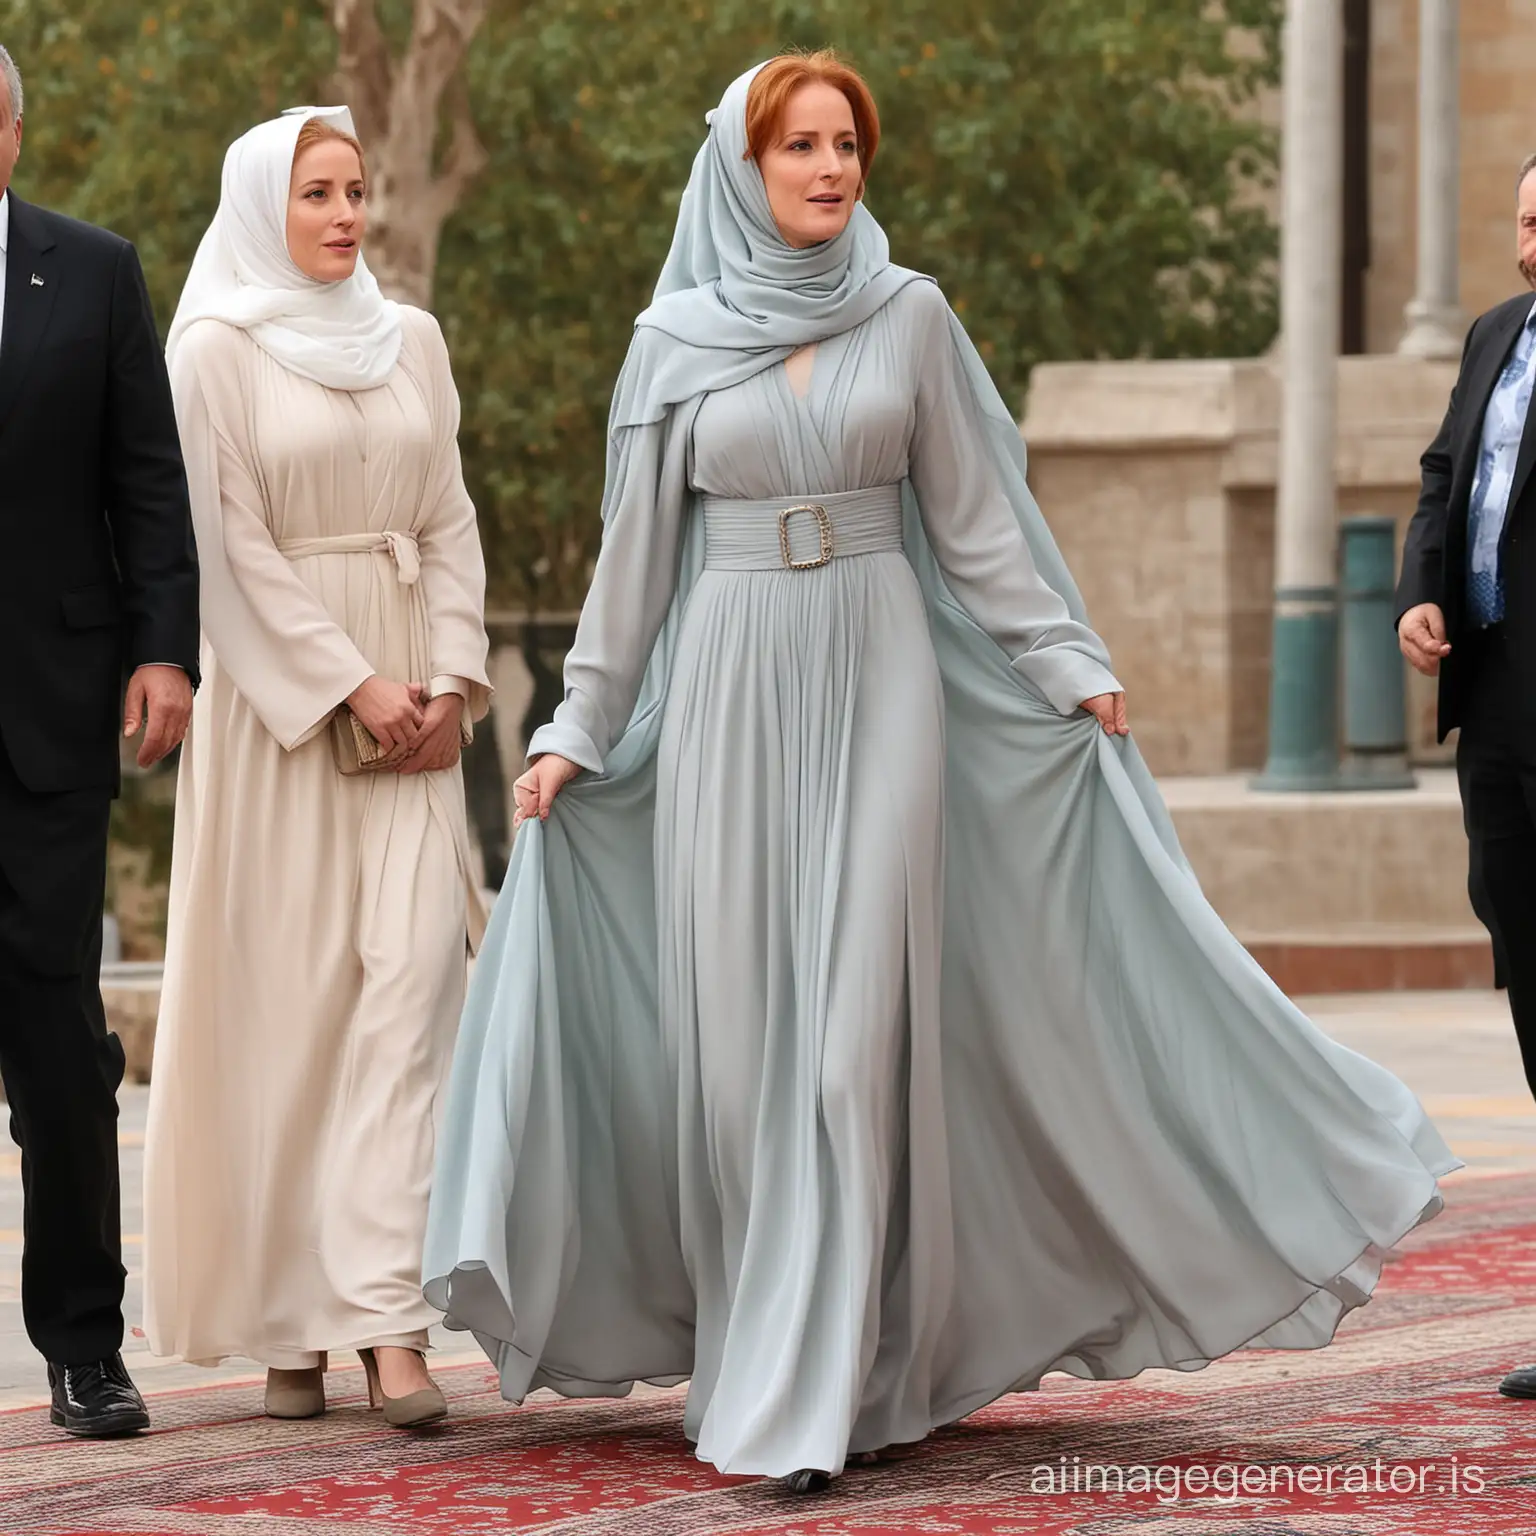 Gillian-Anderson-in-RedHaired-Hijabi-Attire-Walking-HandinHand-with-President-Erdogan